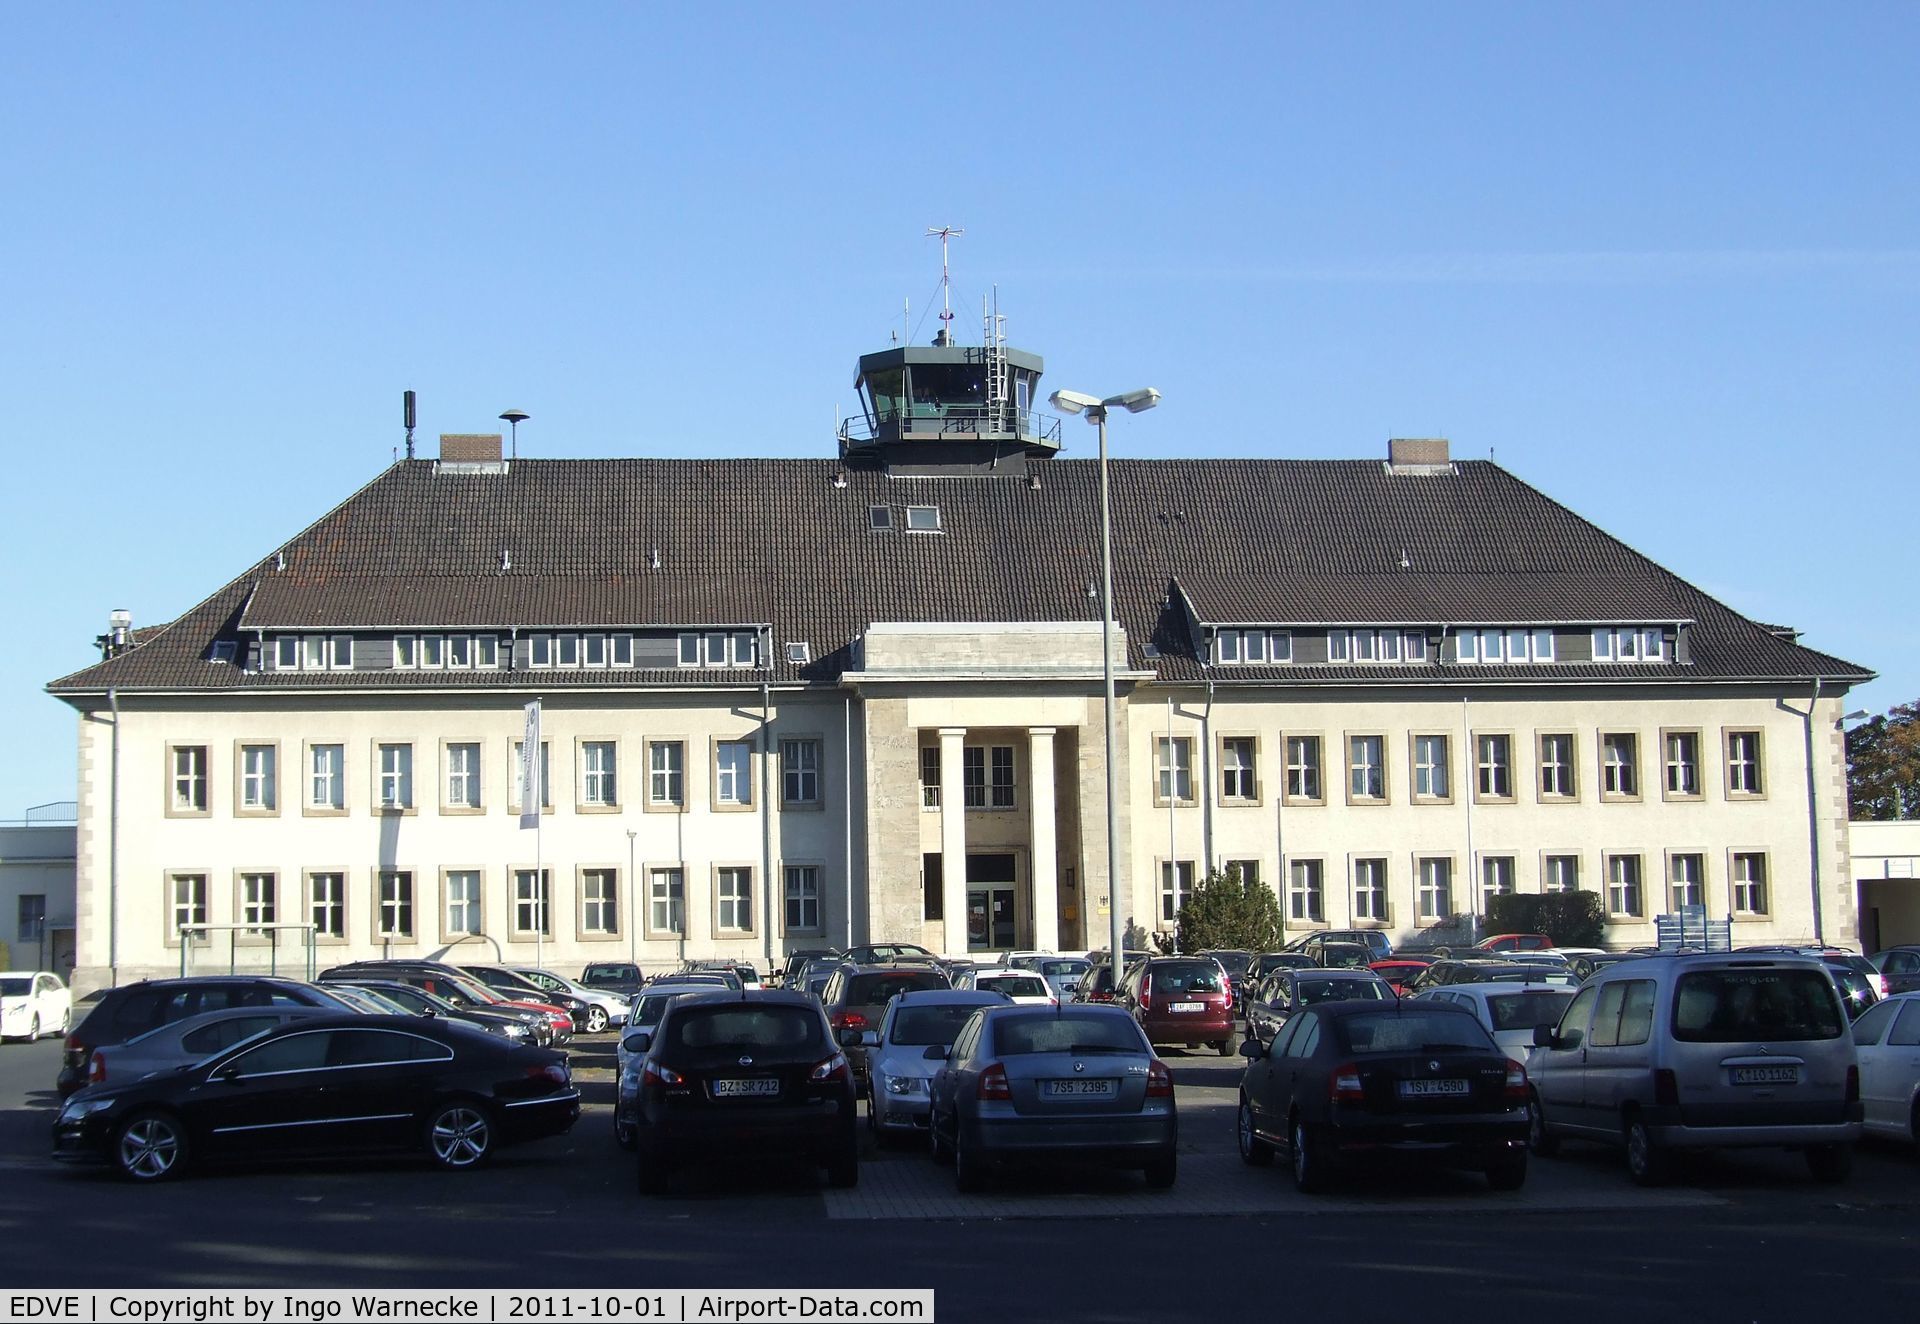 Braunschweig-Wolfsburg Regional Airport, Braunschweig, Lower Saxony Germany (EDVE) - the main terminal building (inaugurated May 1939) at Braunschweig-Waggum airport